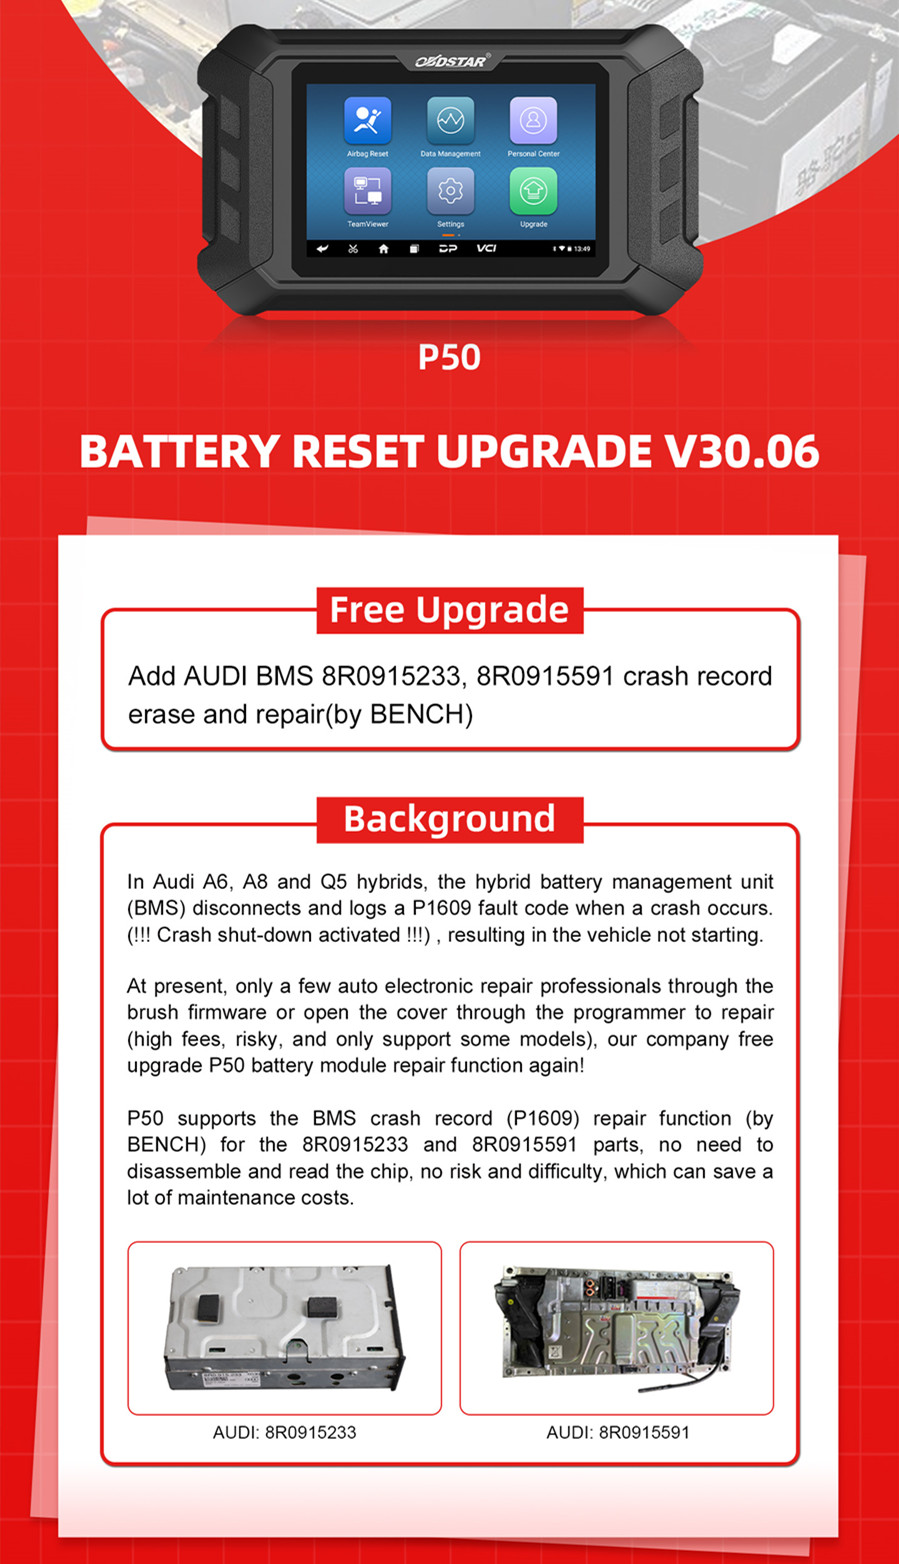 P50 BATTERY RESET UPGRADE V30.06